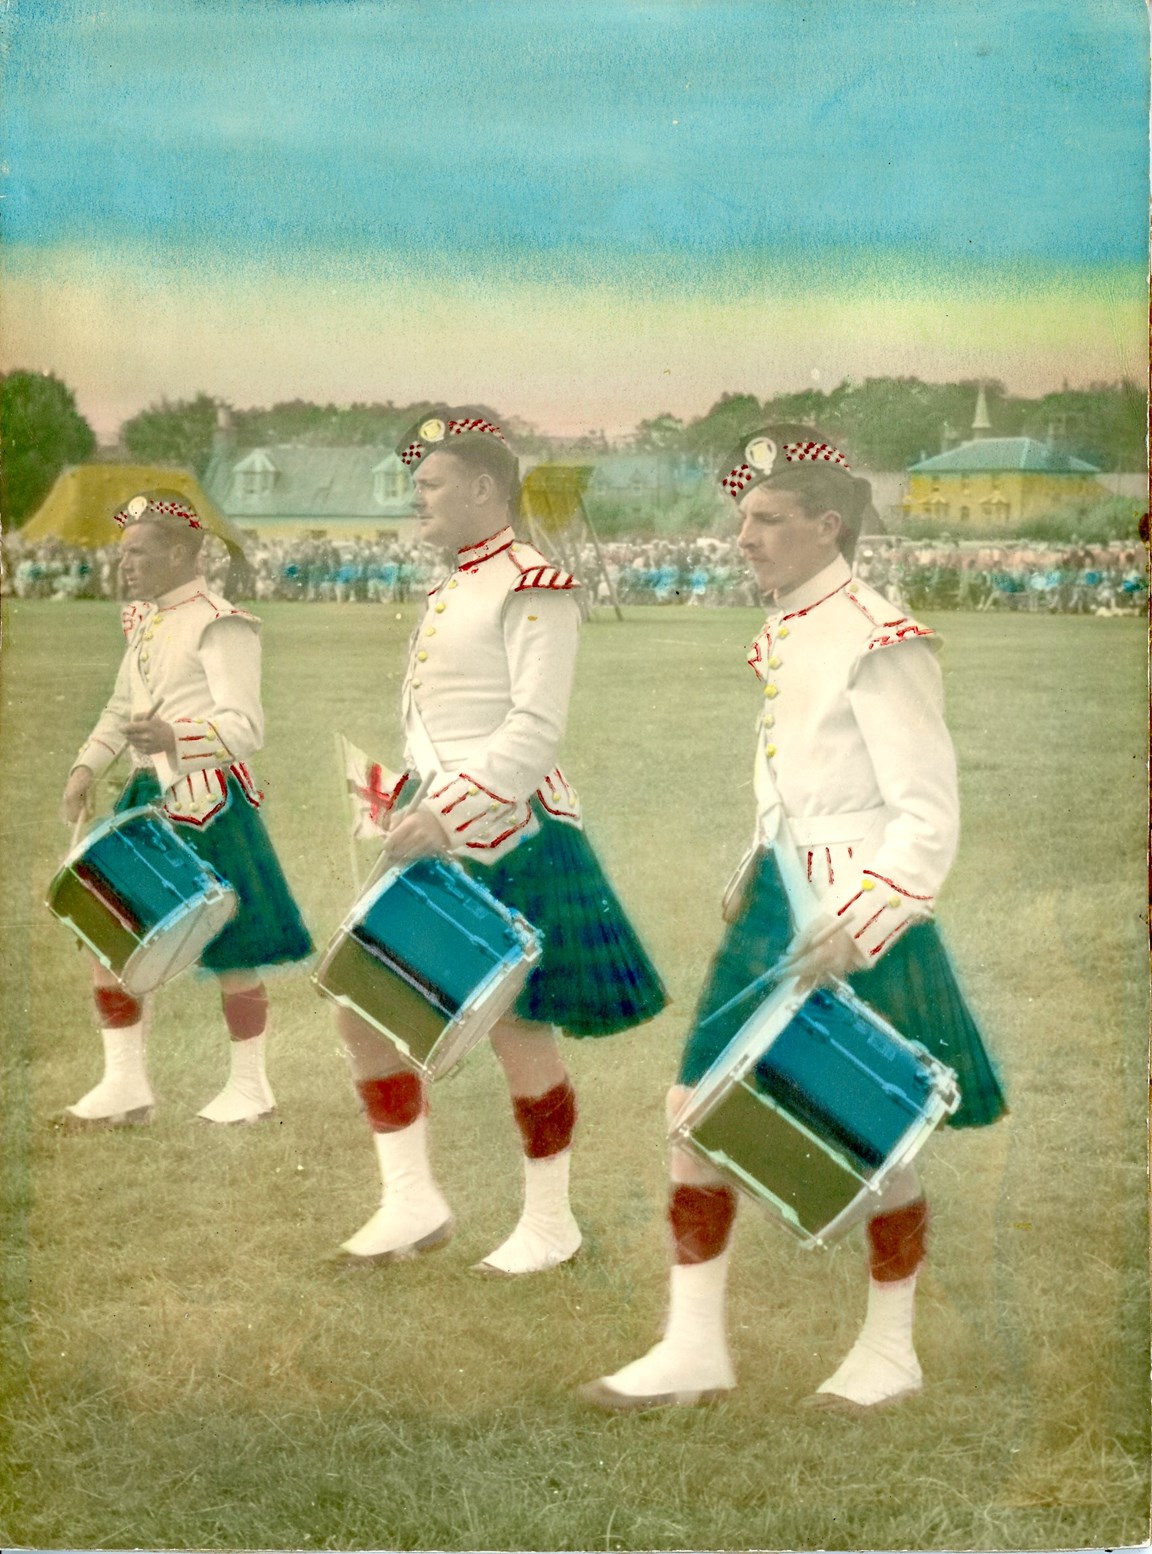 Members of Dornoch Pipe Band